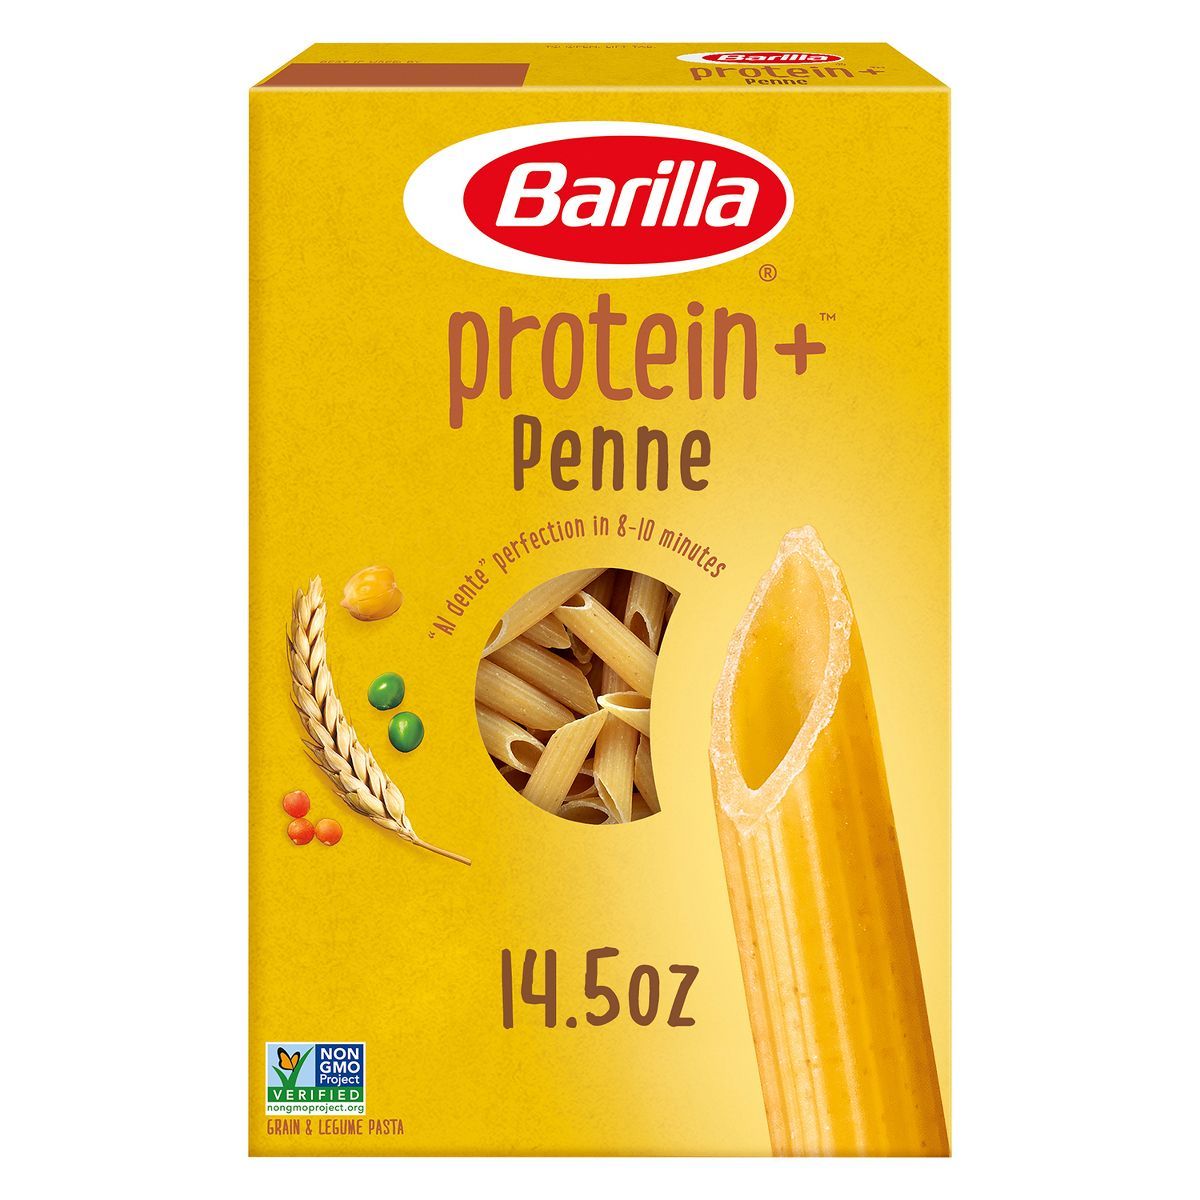 Barilla ProteinPLUS Multigrain Penne Pasta - 14.5oz | Target